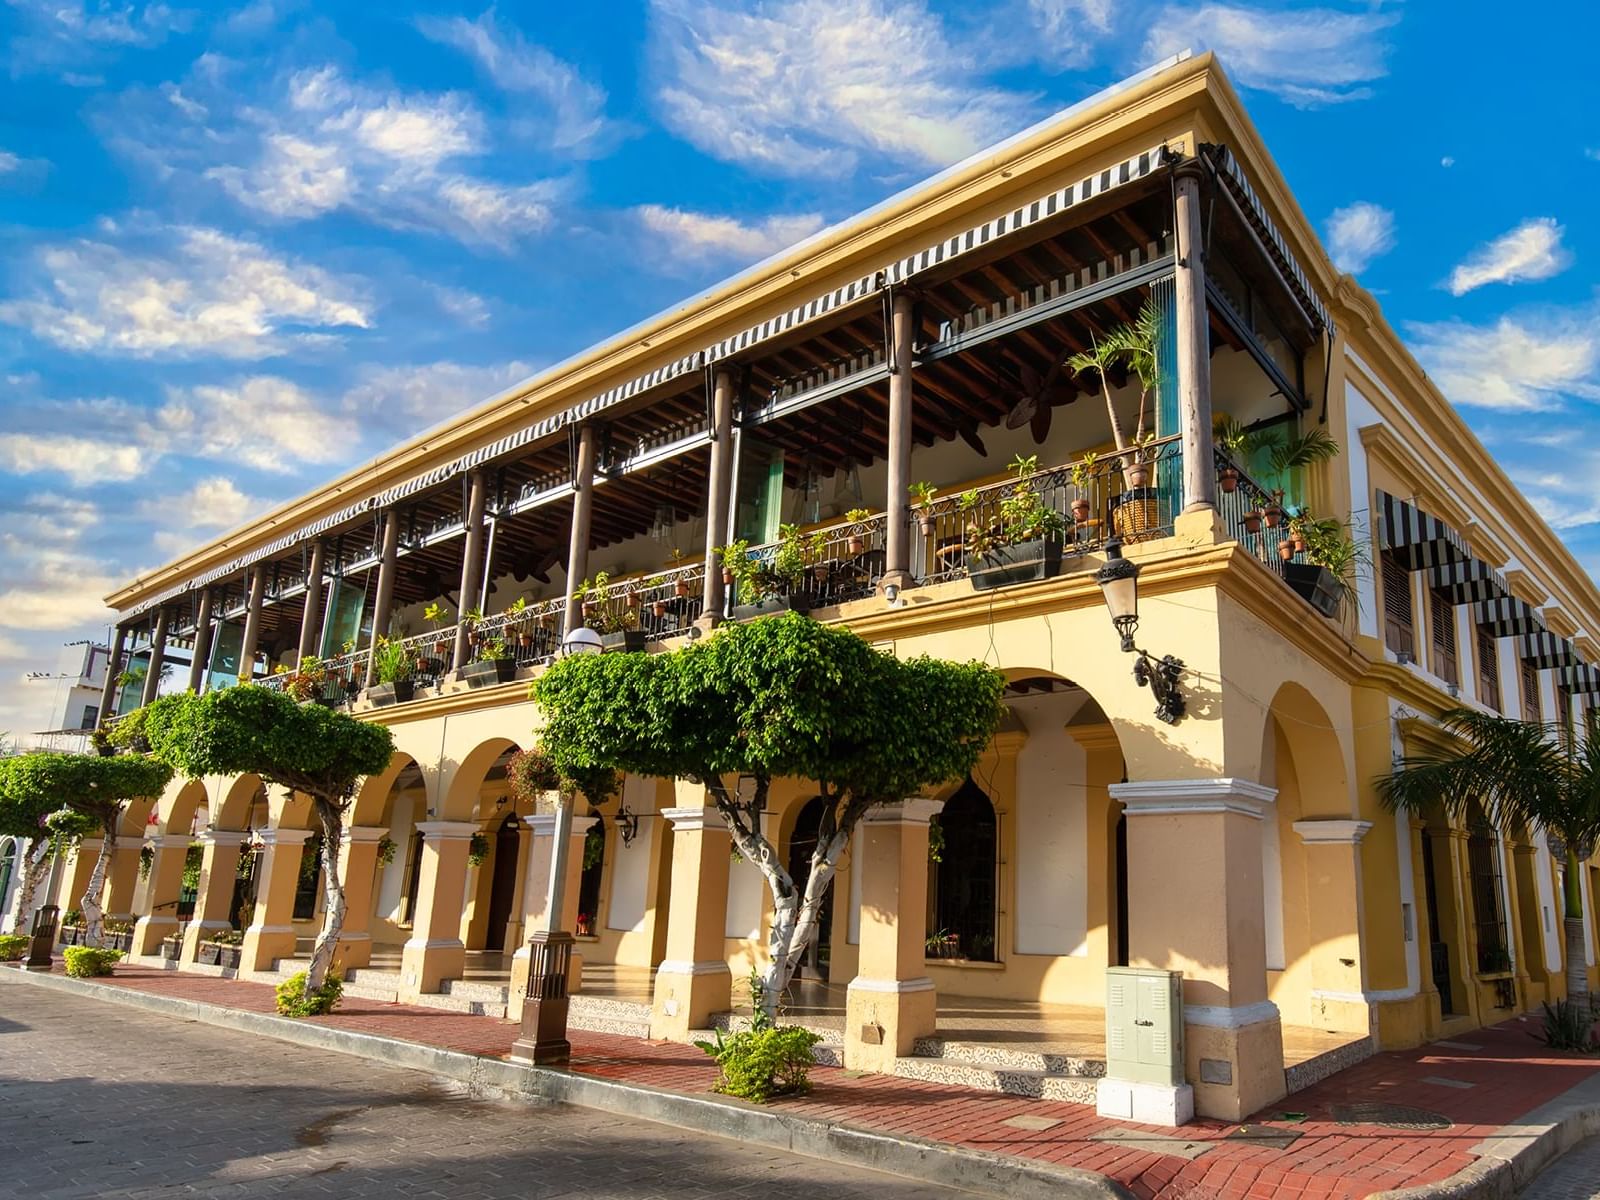 Exterior view of La Plazuela Machado near Fiesta Inn Hotels